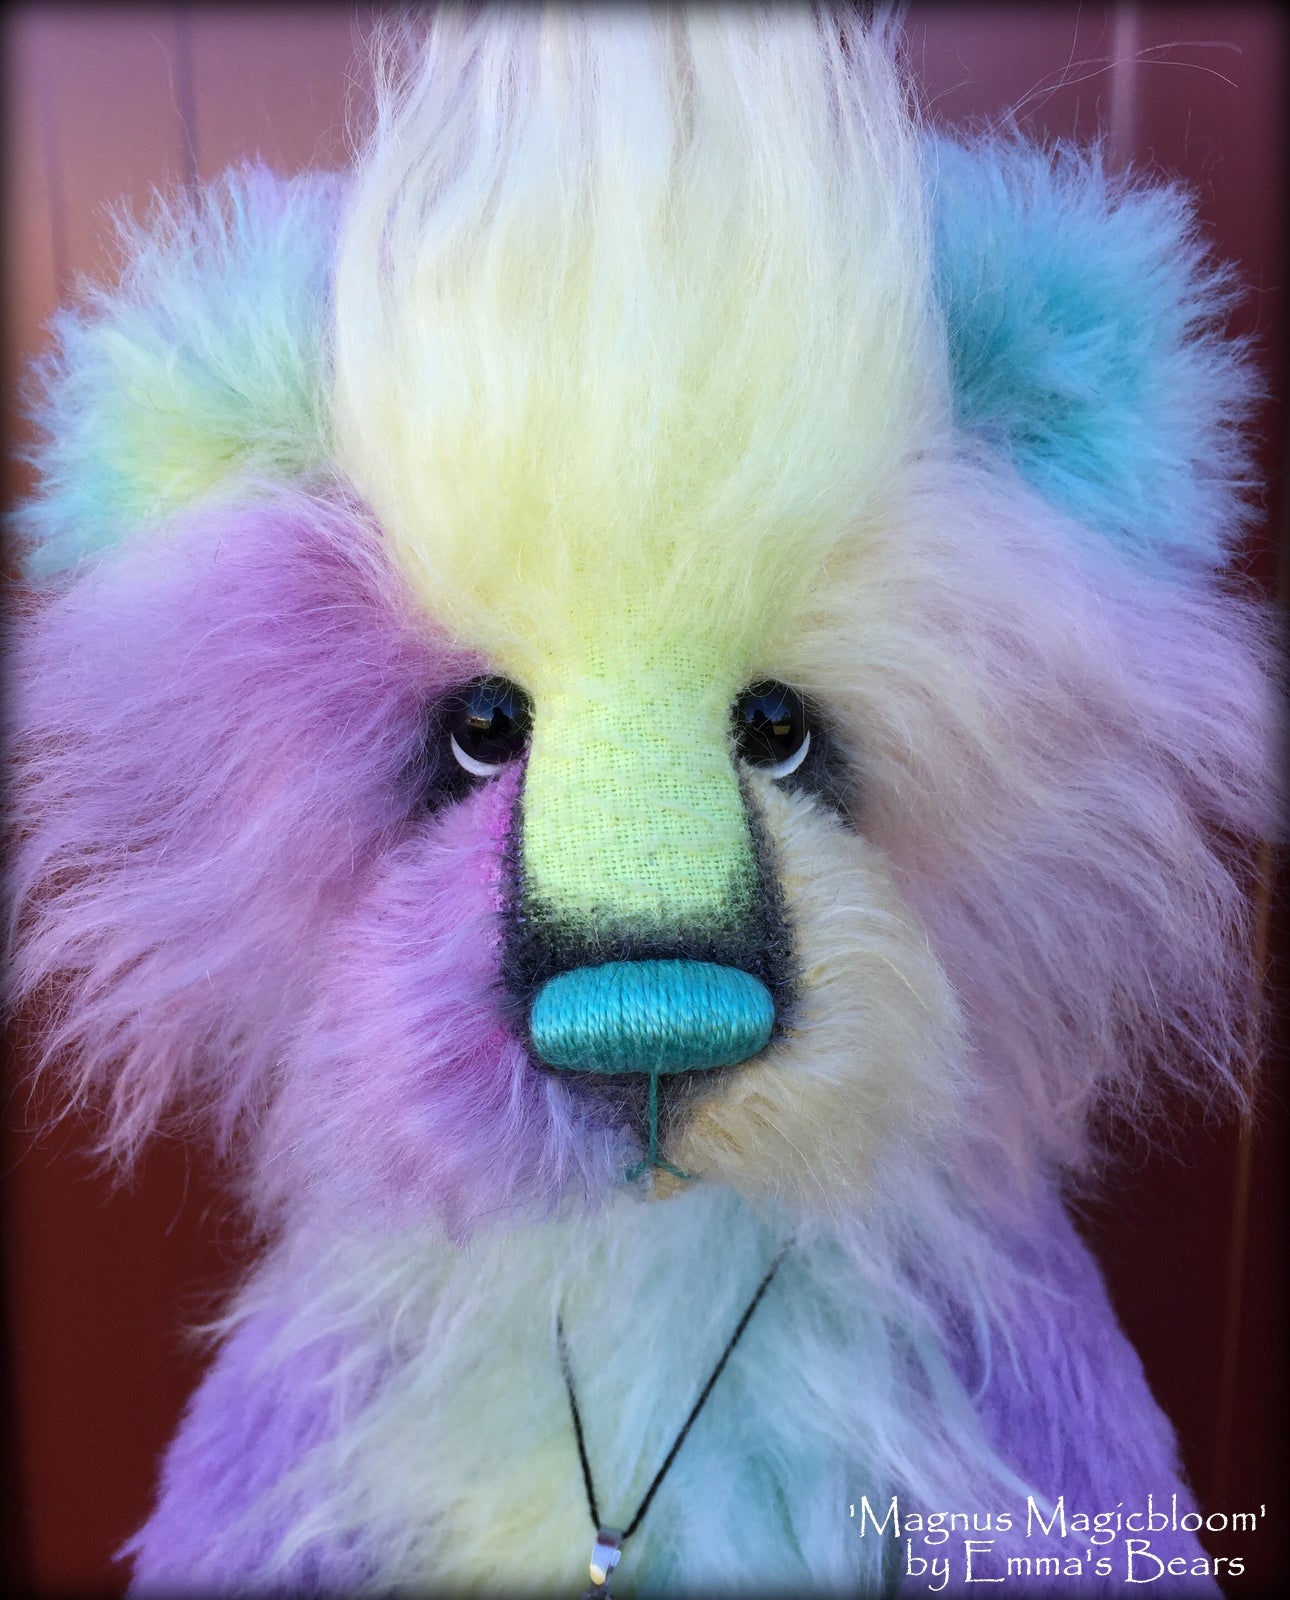 Magnus Magicbloom - 18in Hand-dyed mohair and alpaca Artist Bear by Emmas Bears - OOAK